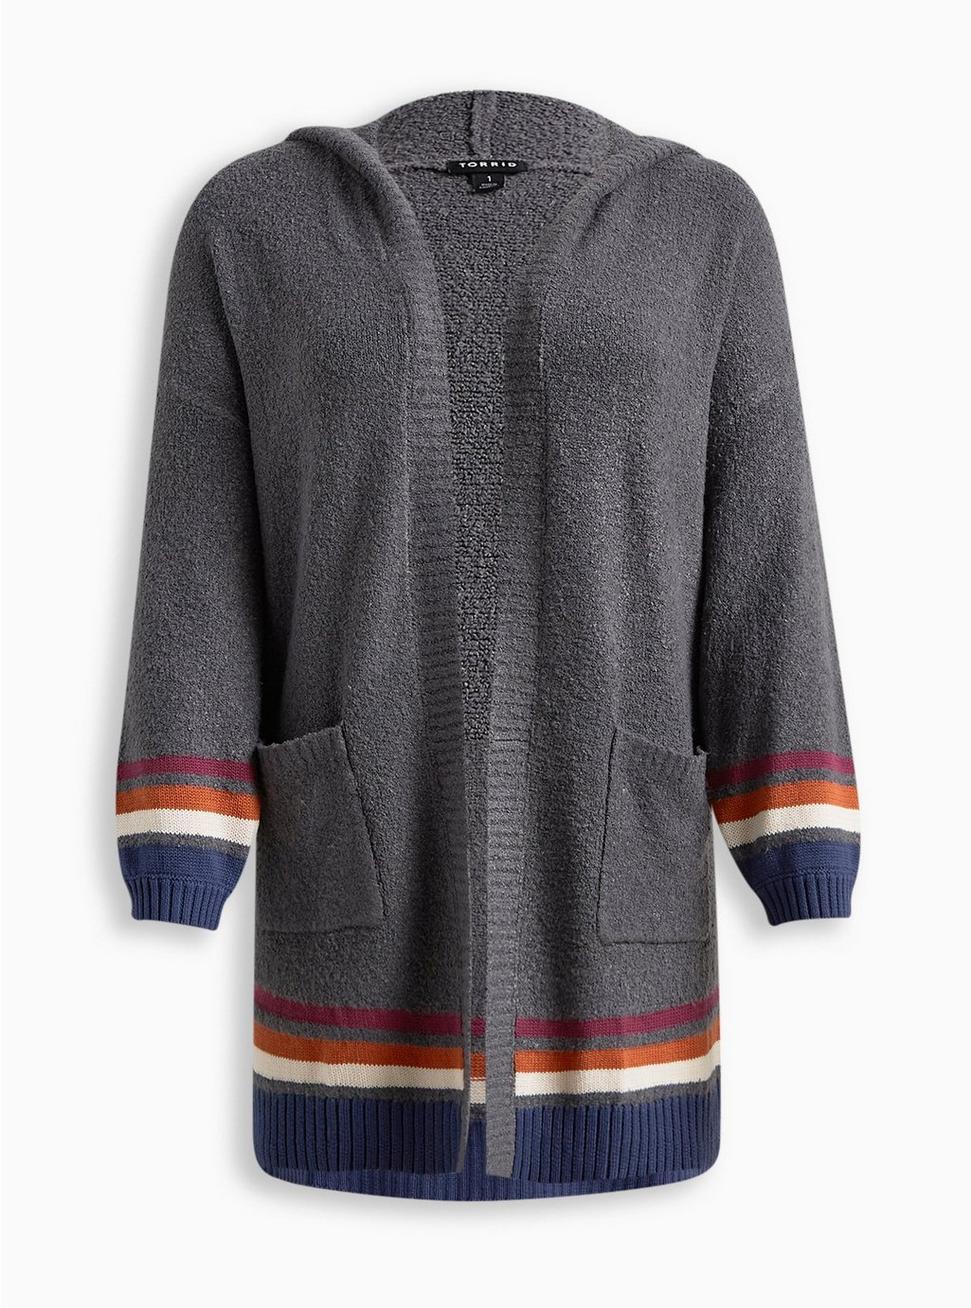 Cardigan Hooded Open Front Sweater, TORNADO, hi-res